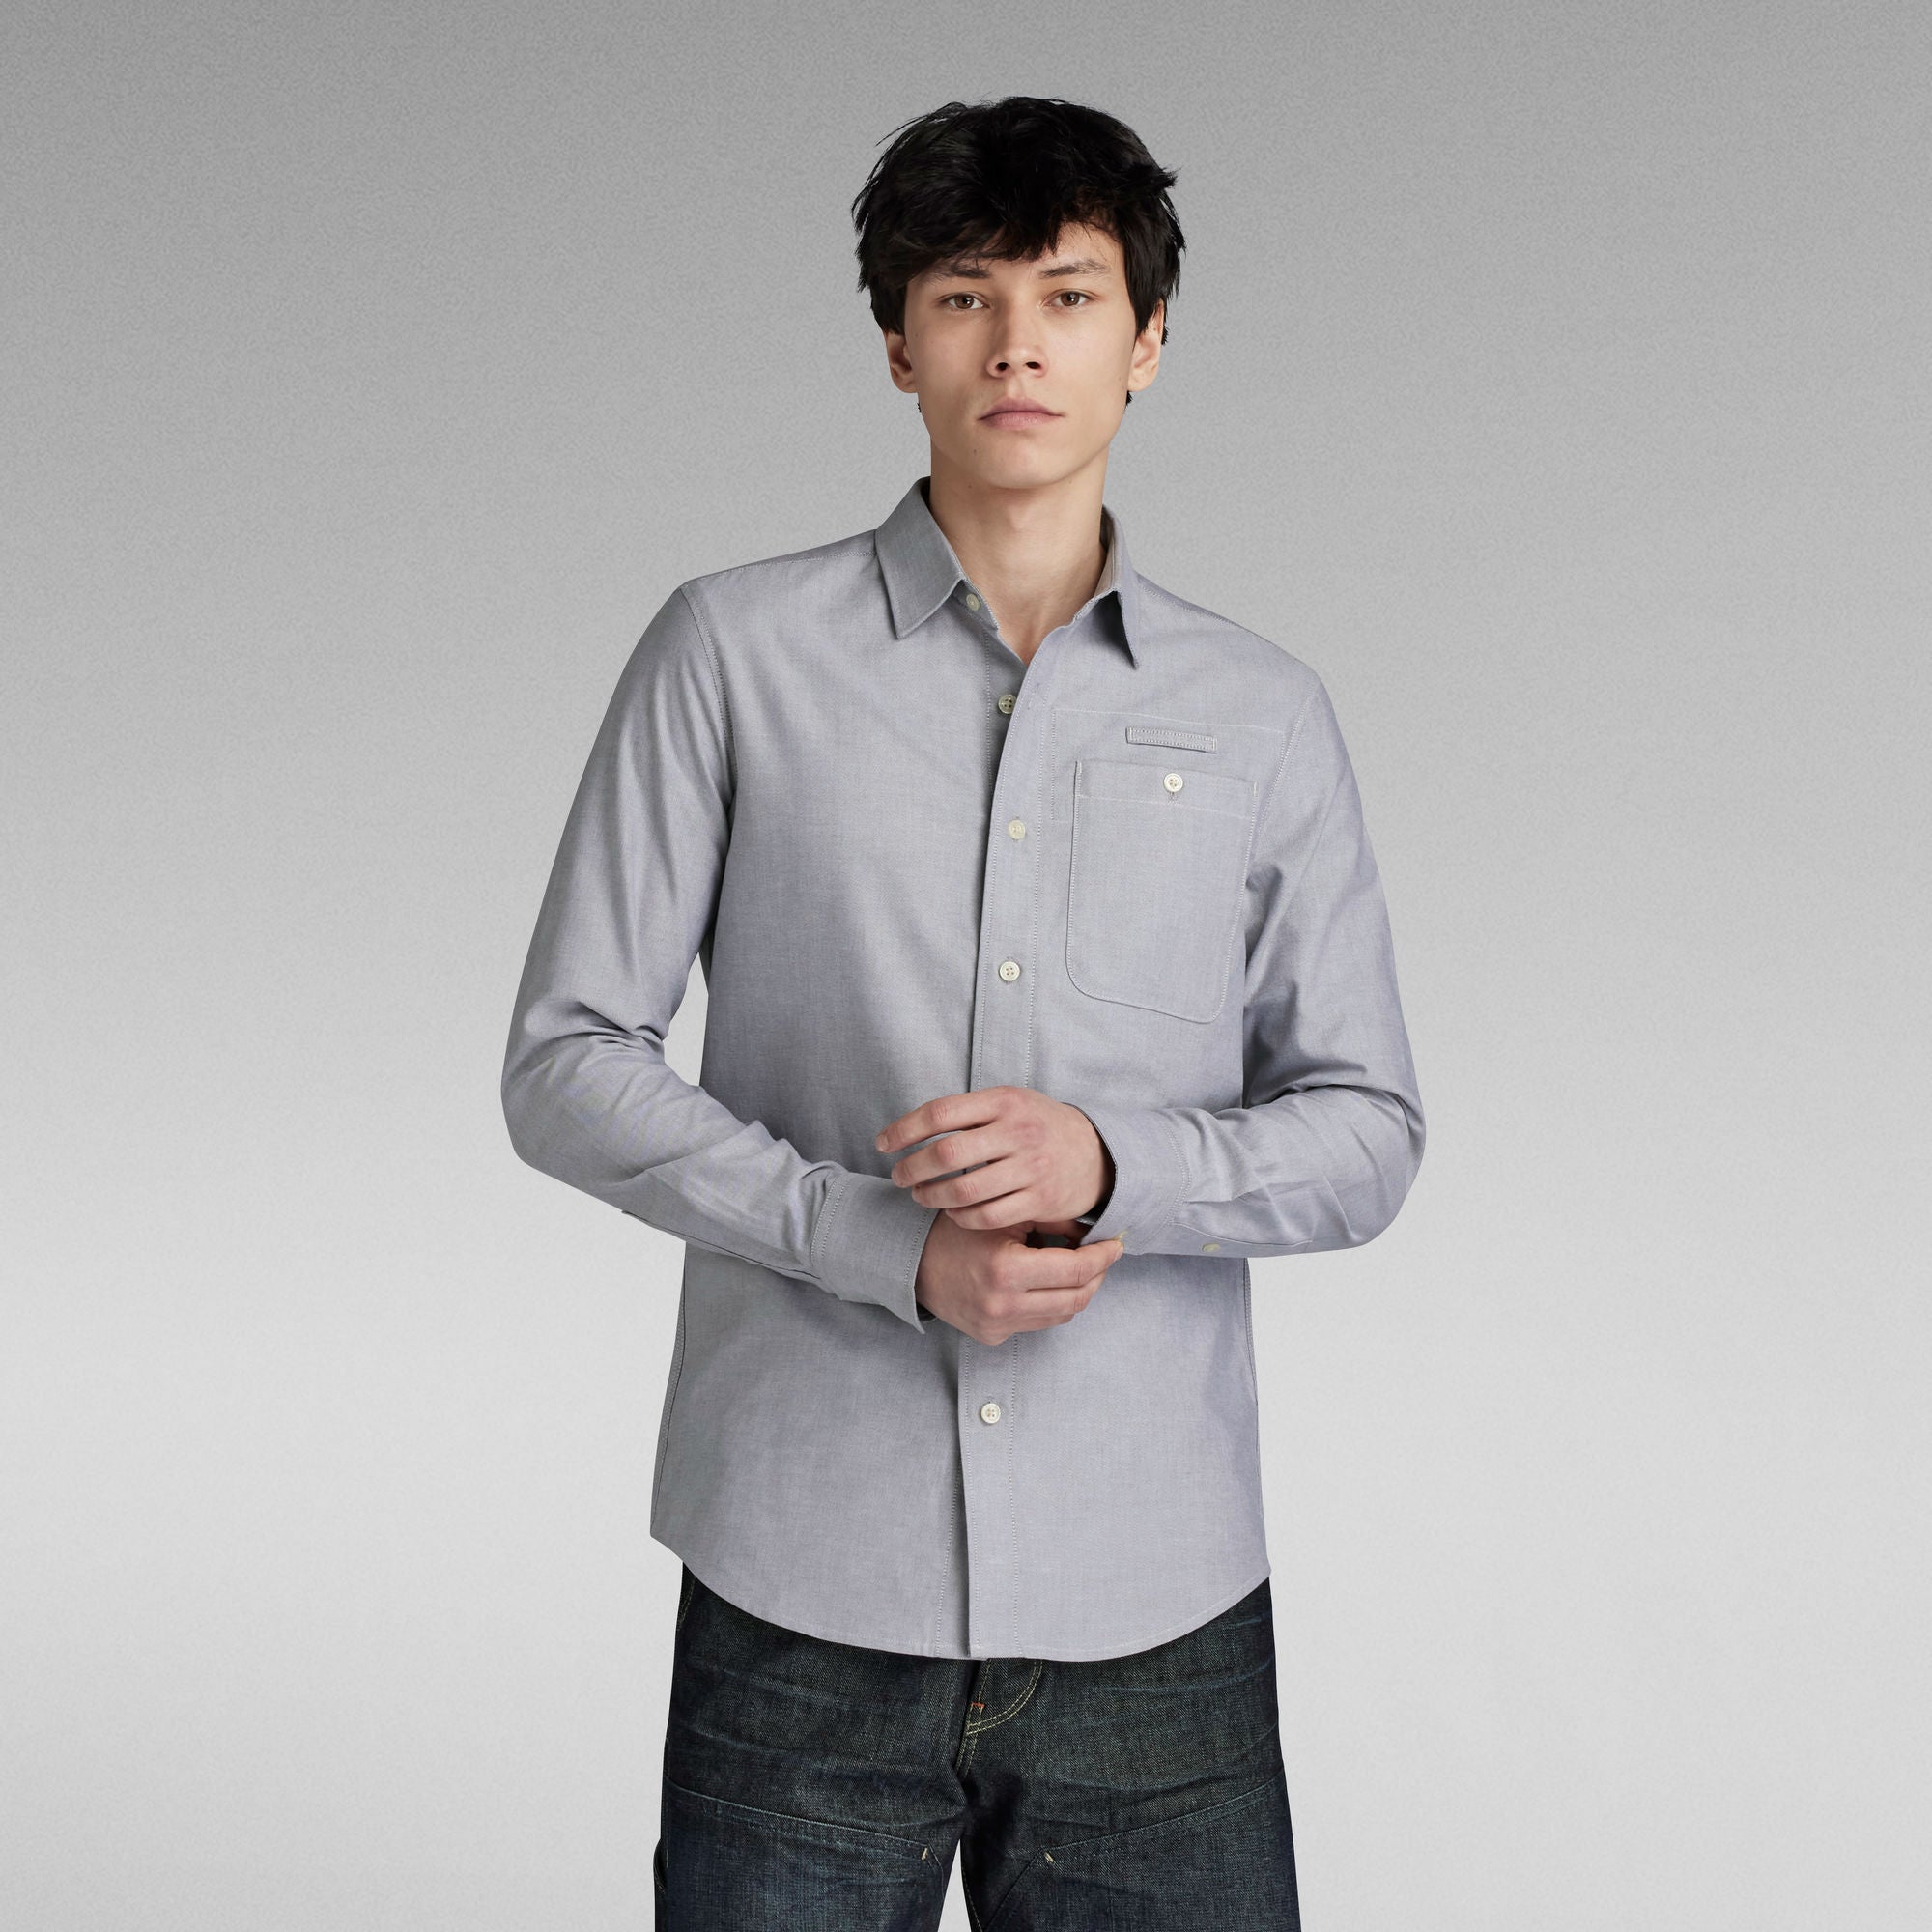 G-Star Raw - Bristum 2.0 Slim LS Shirt - Correct Grey/White Oxford